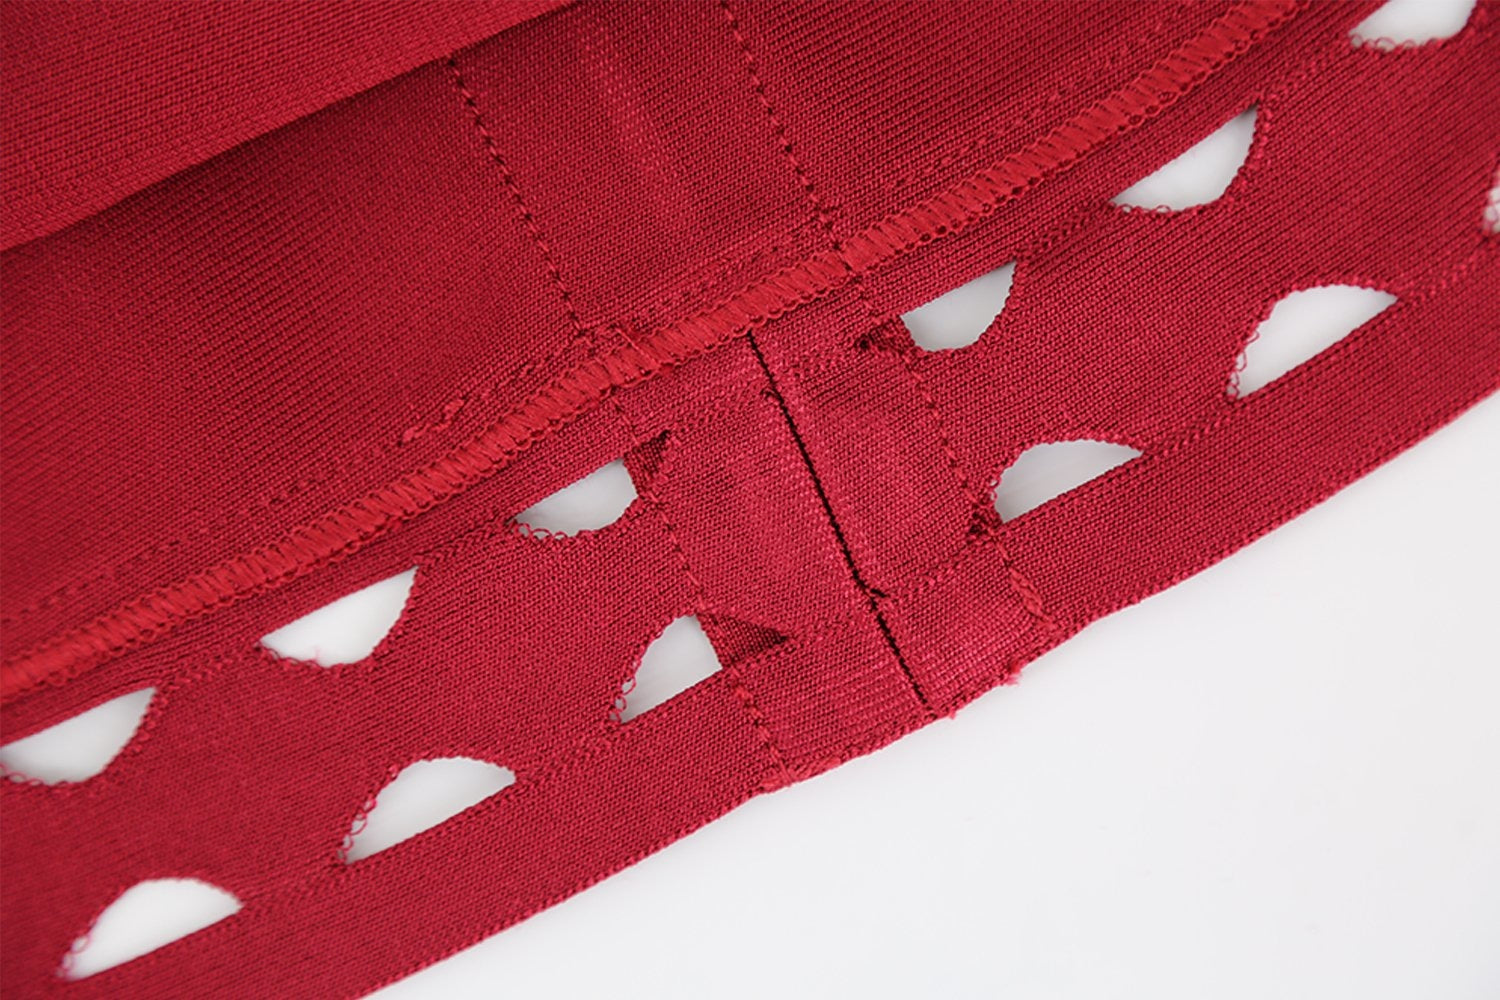 Winnal Off Shoulder Hollow Out Strap Fishtail Bandage Dress